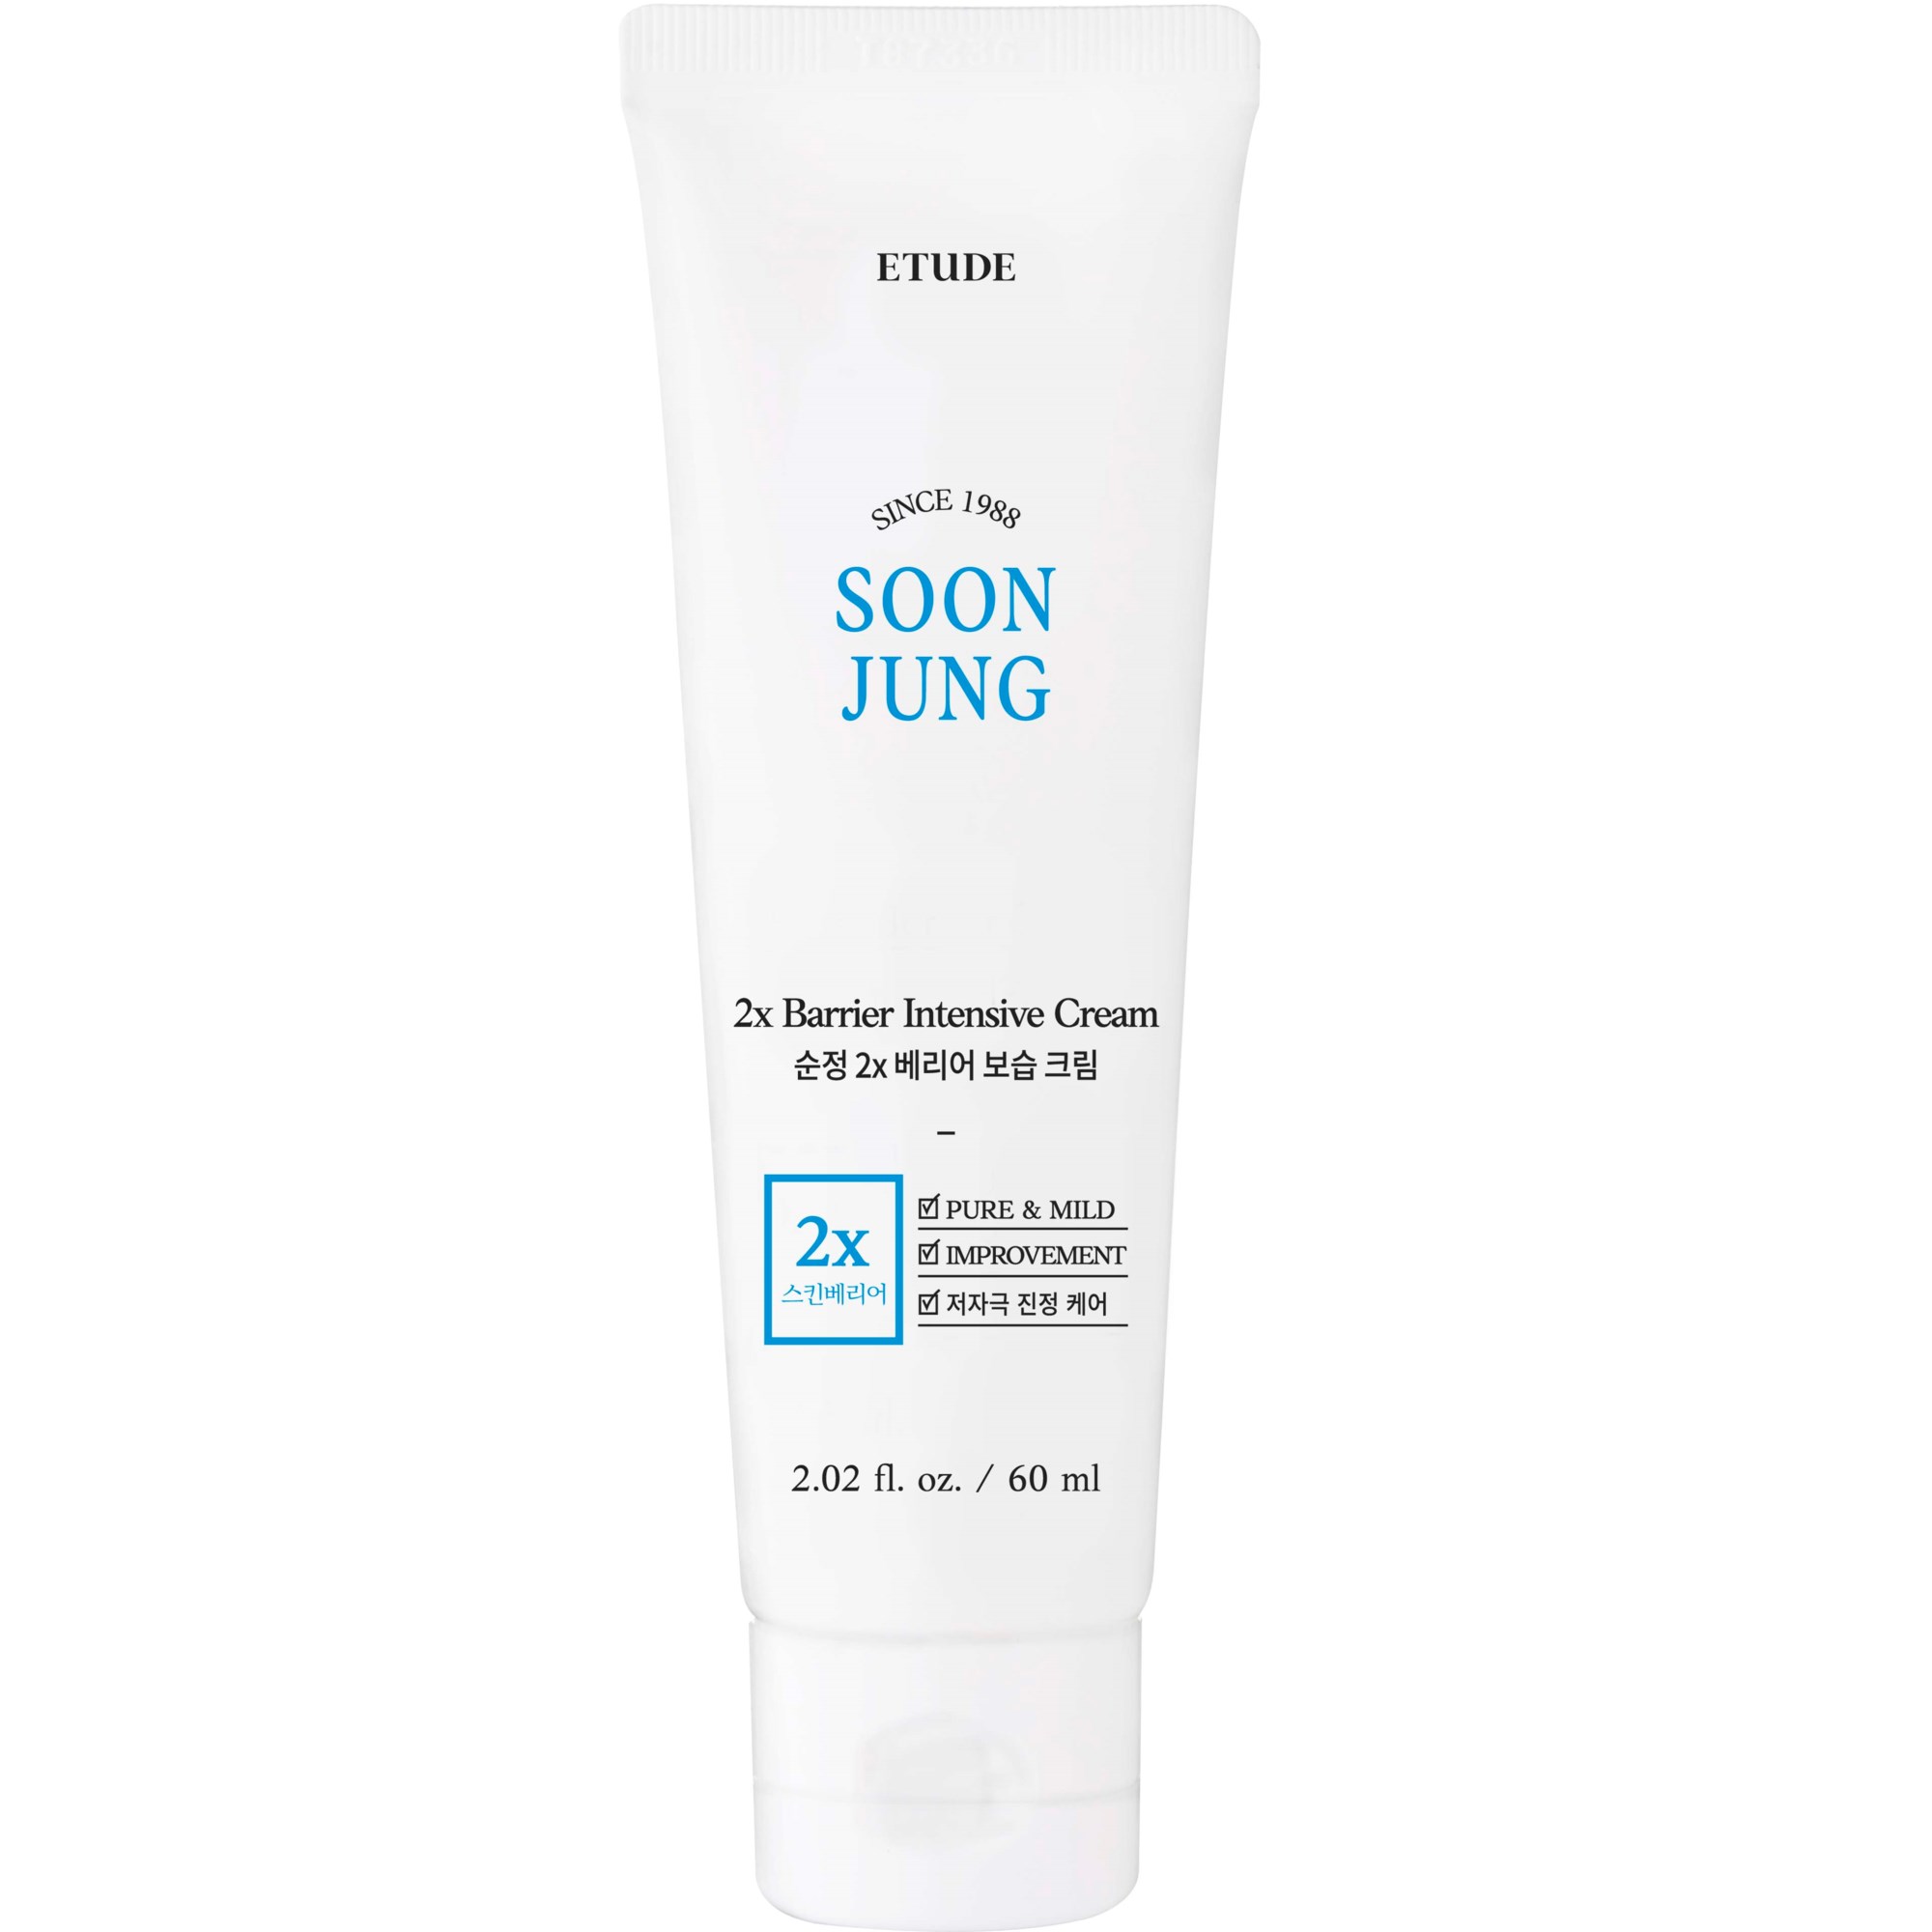 Etude Soon Jung 2x Cream 60 ml